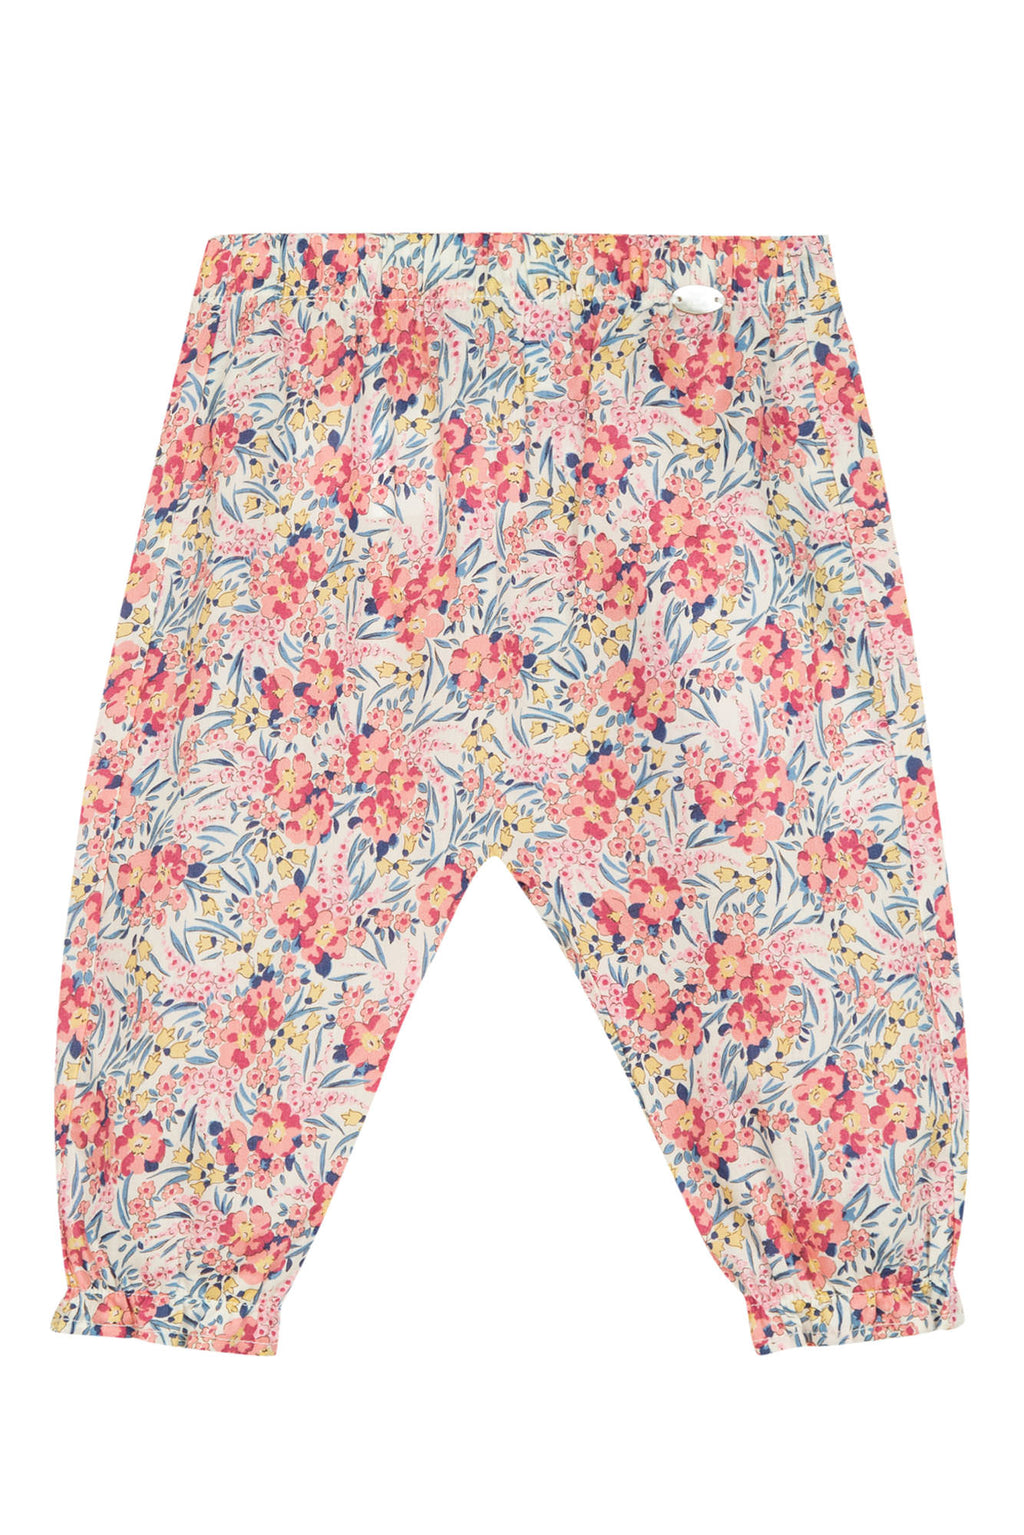 Trousers - Cotton fabric Liberty poppy